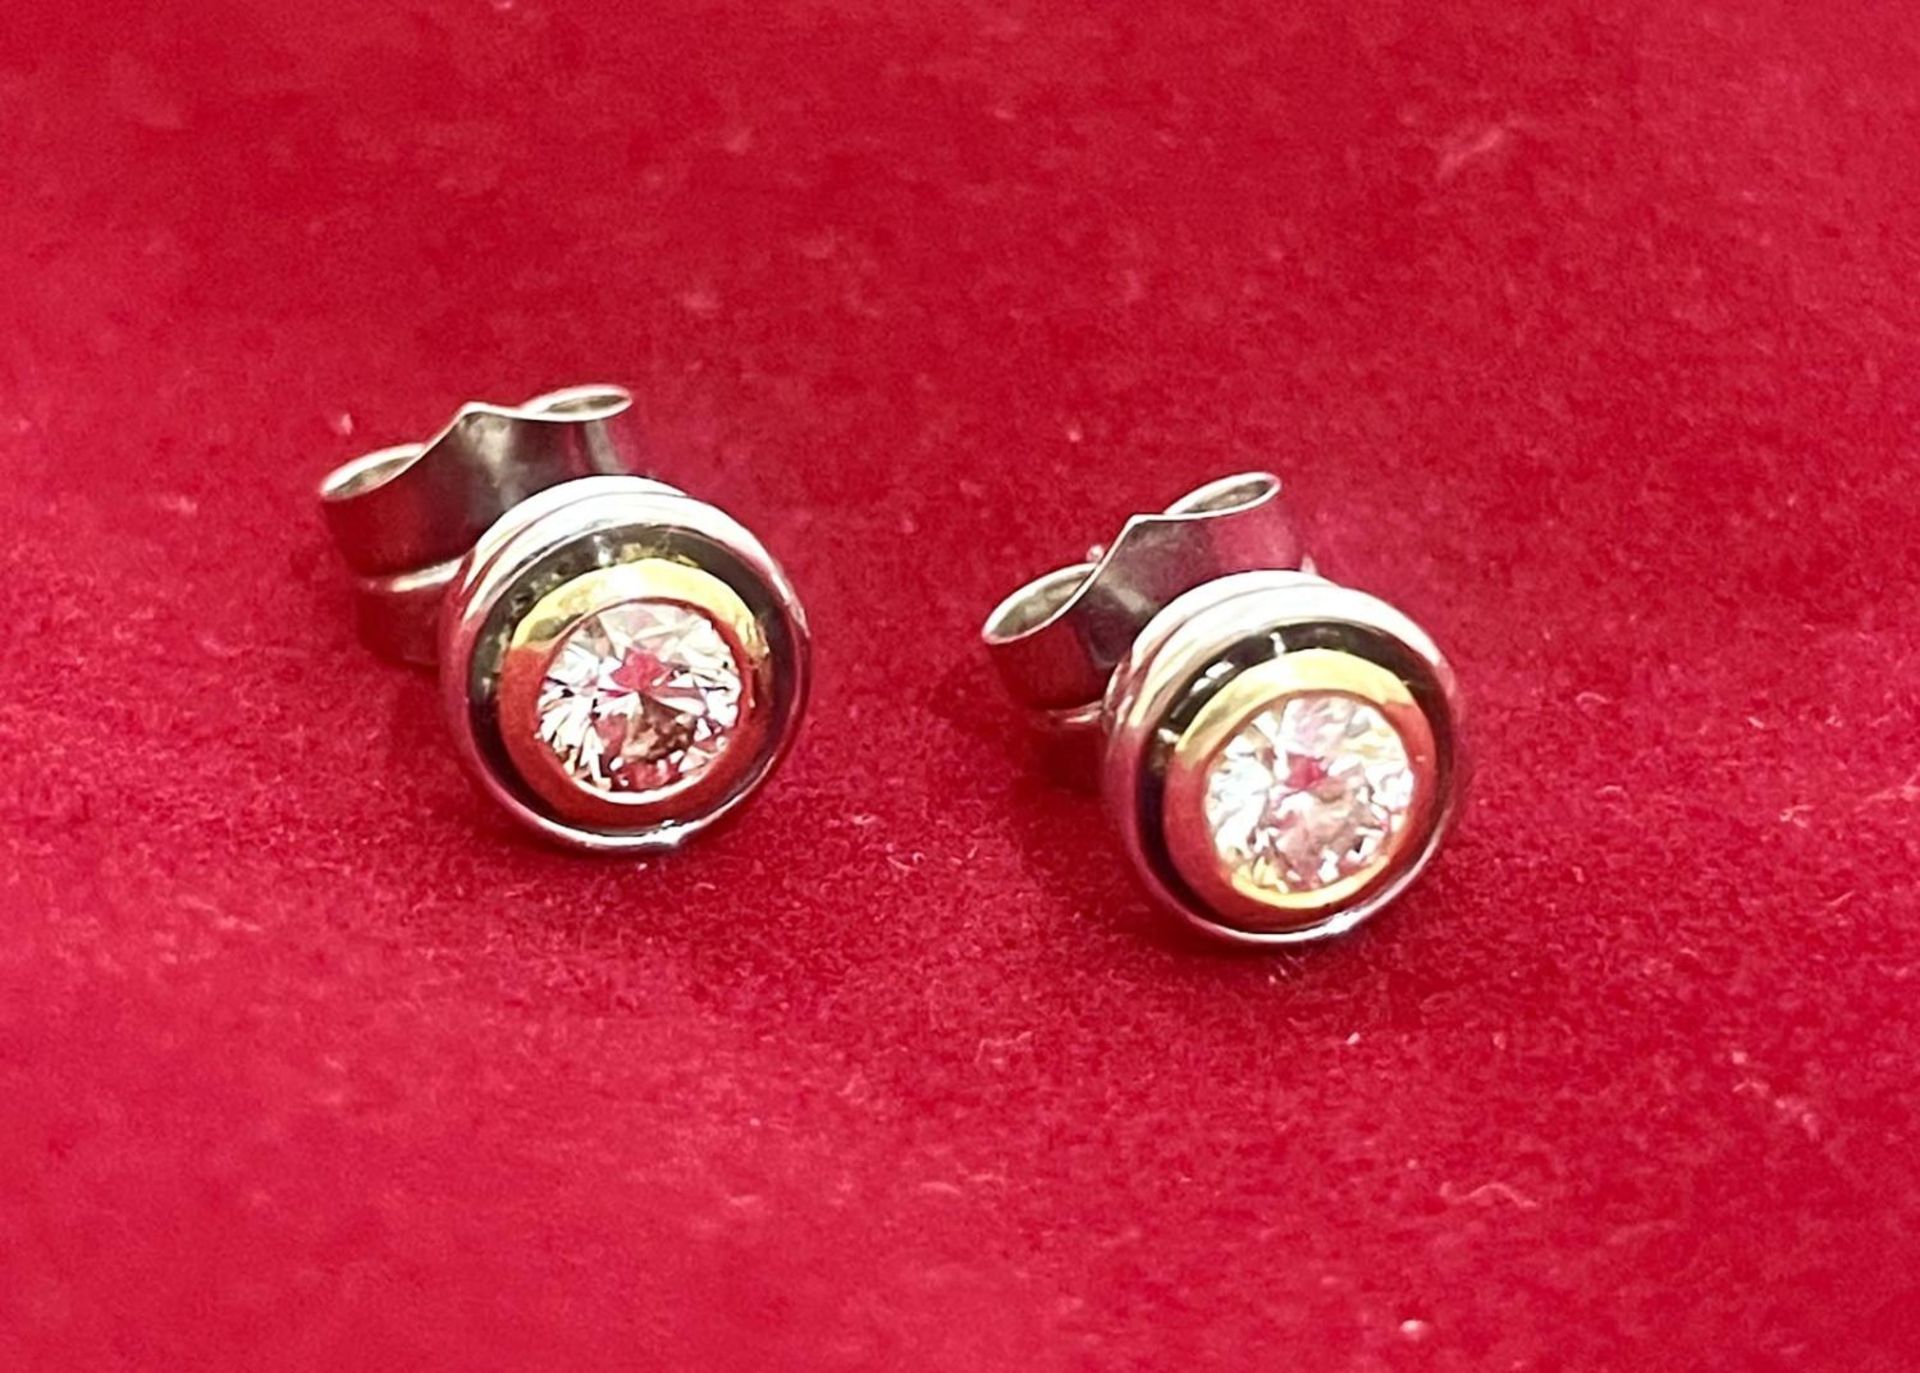 Square sleeper model earrings in 18kt white gold and diamond.